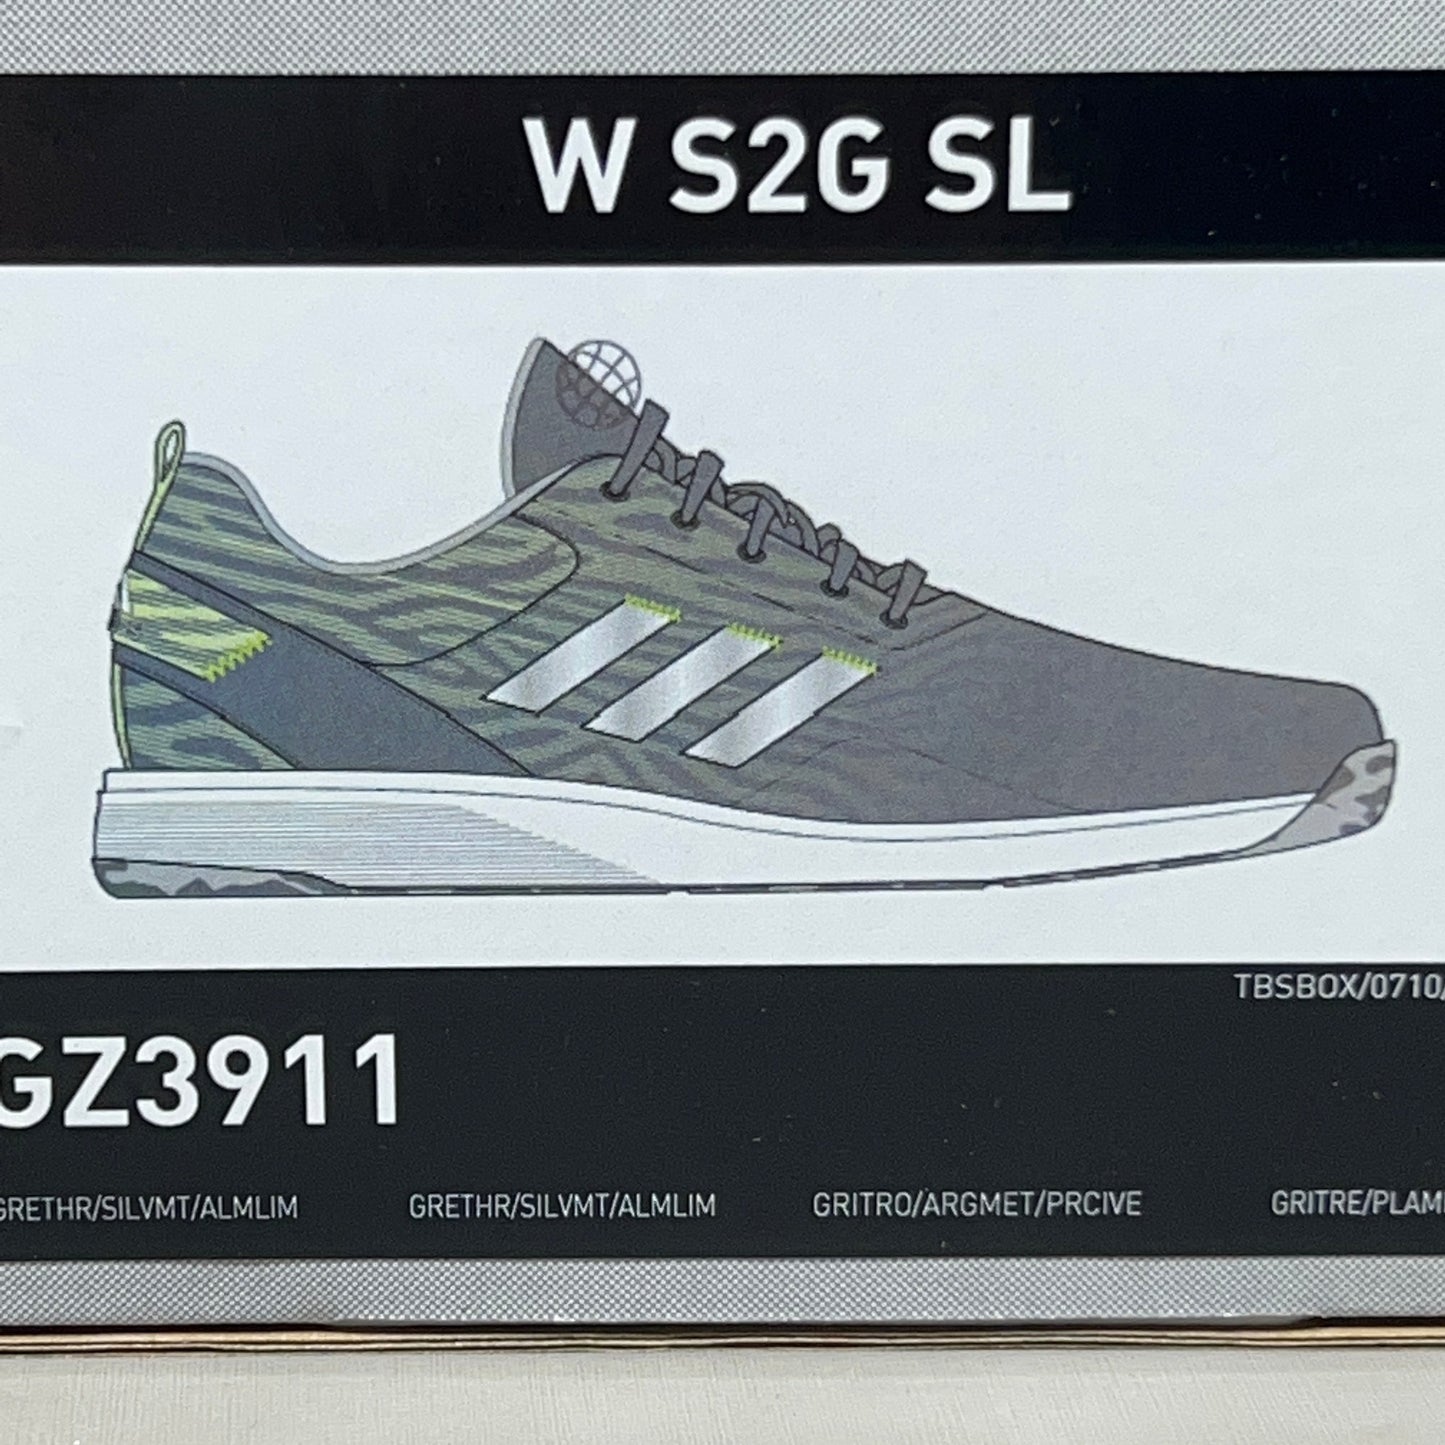 ADIDAS Golf Shoes W S2G SL Waterproof Women's Sz 5.5 Grey / Lime GZ3911 (New)